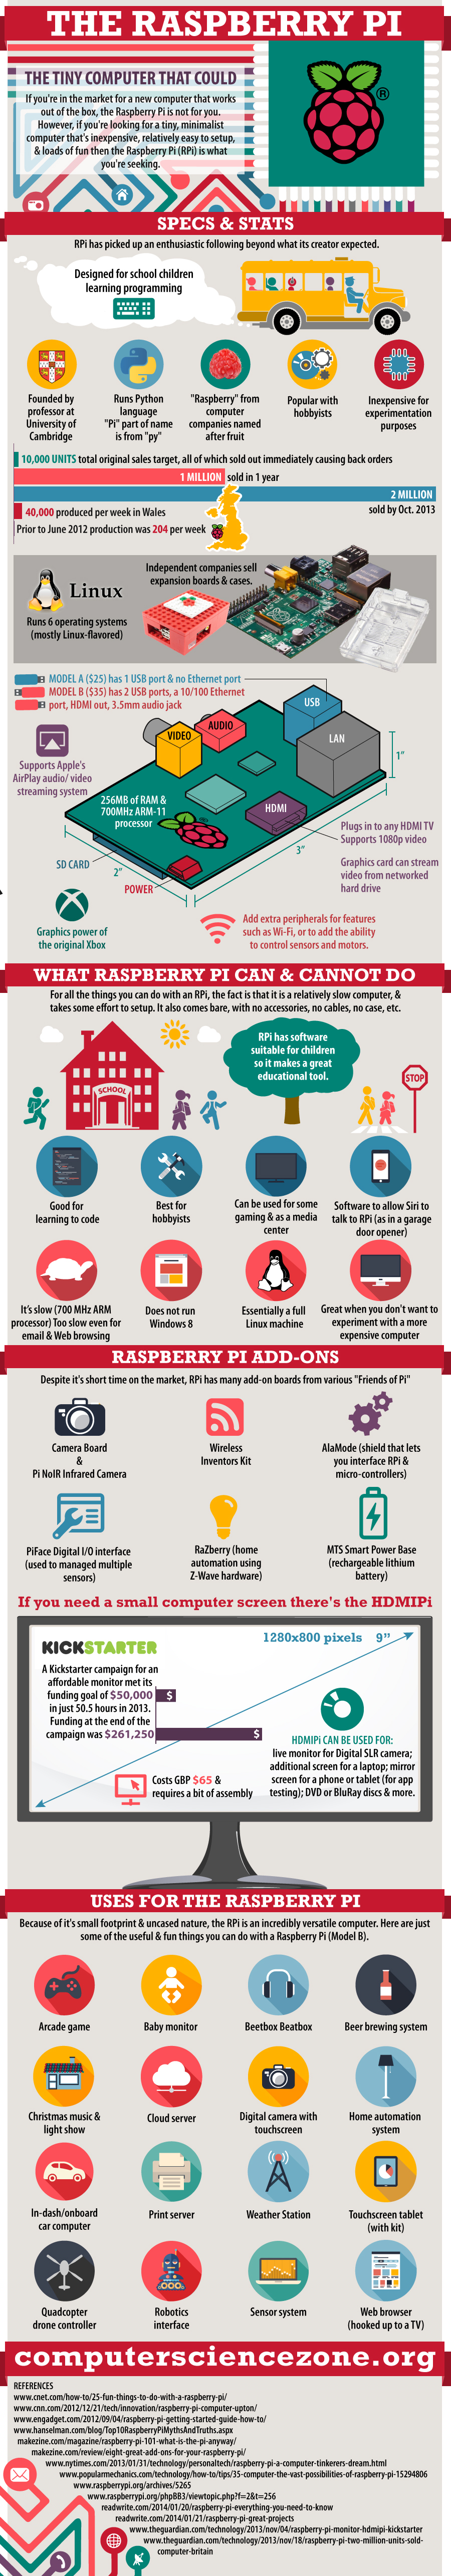 Raspberry Pi en une image